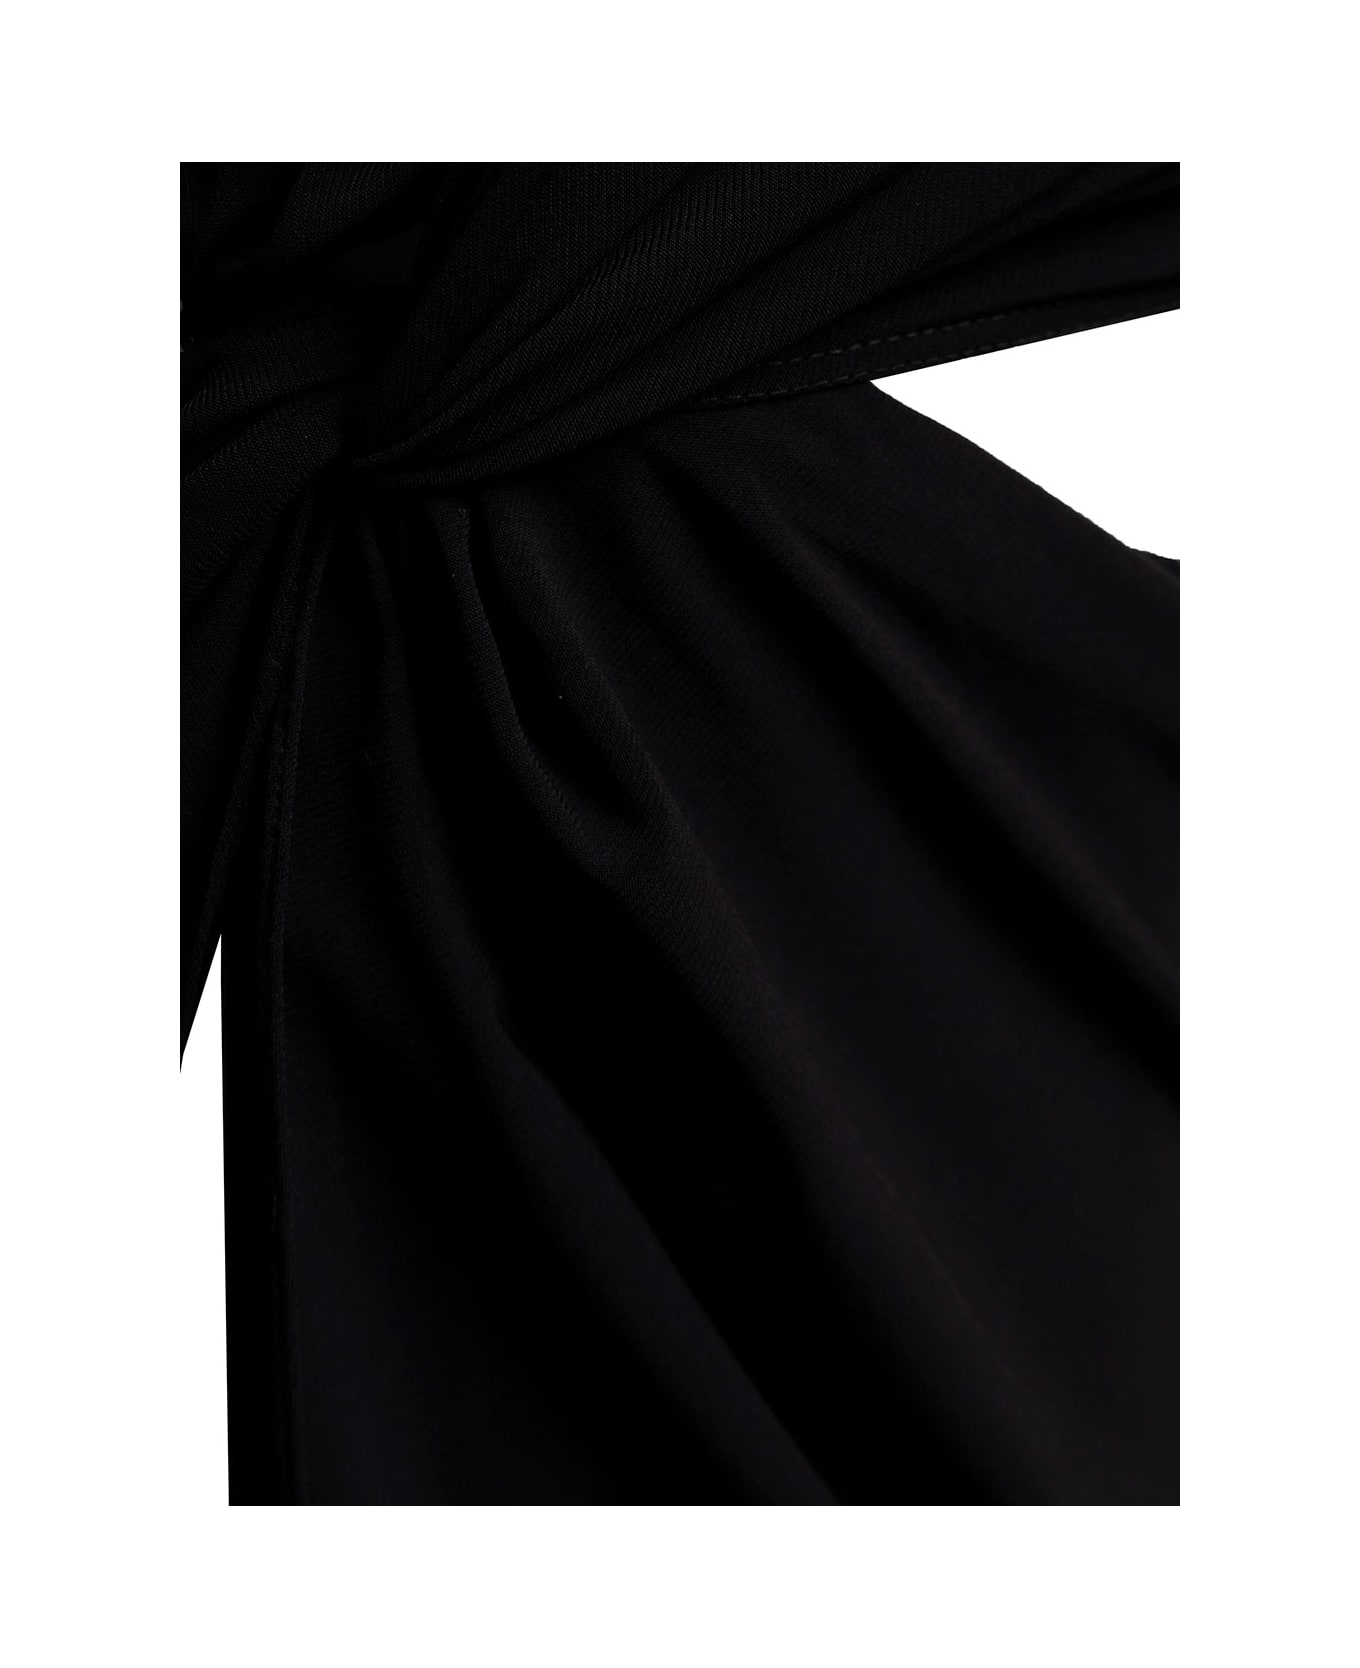 Monot Woman's Jersey Black Asymmetrical Dress With Cut Out Details - Black